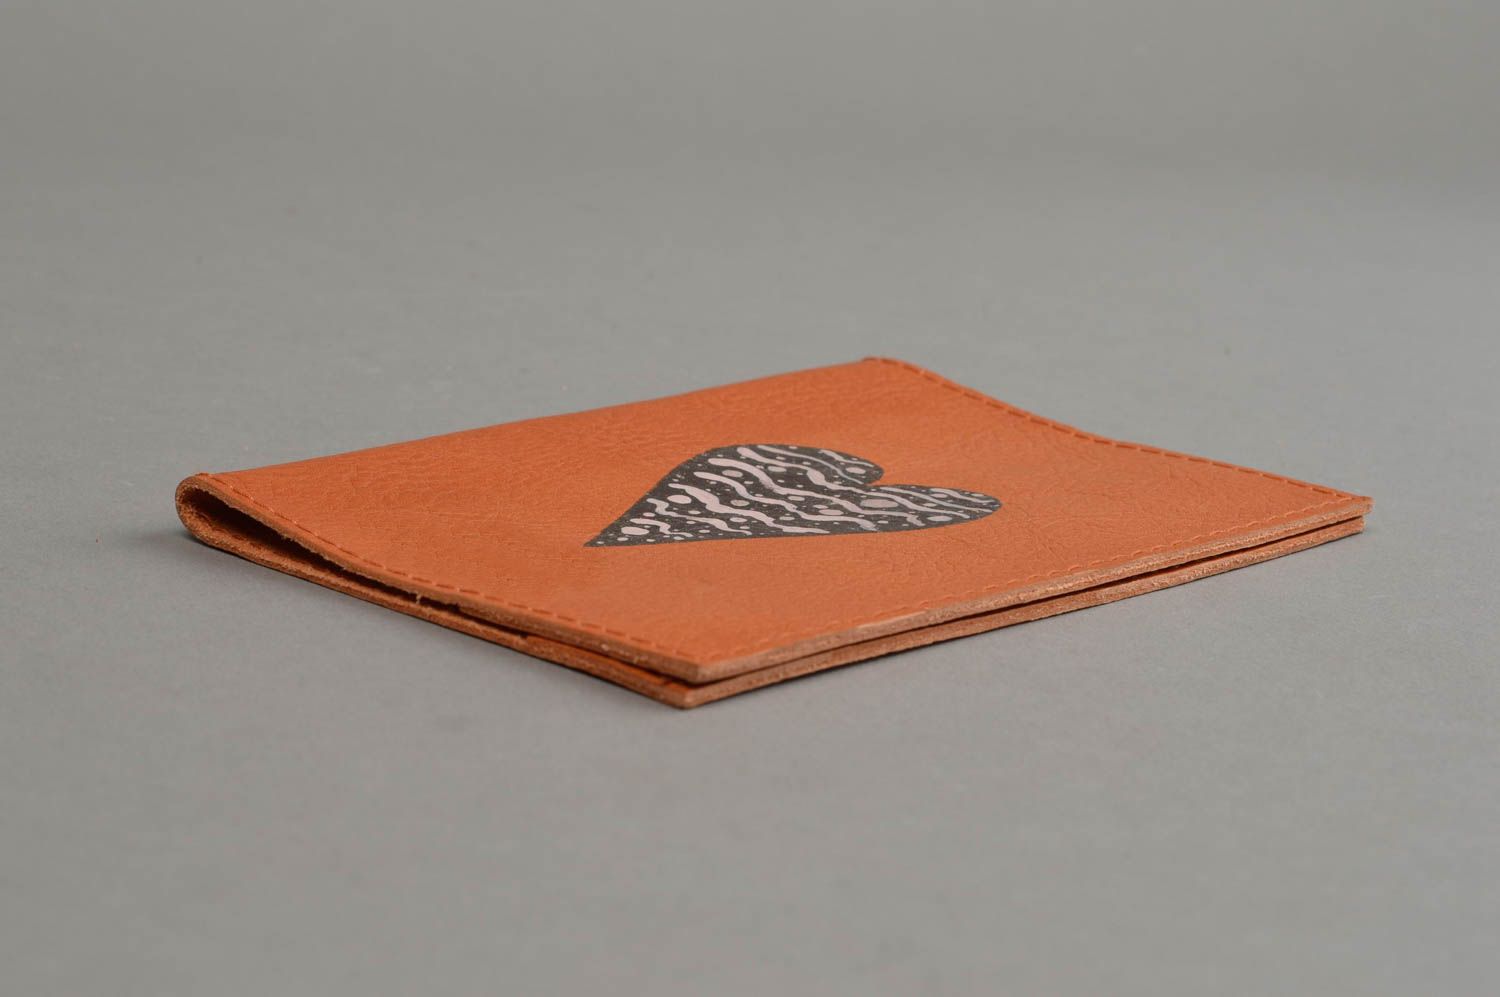 Handmade designer leather passport cover unusual fashion accessories gift ideas photo 3